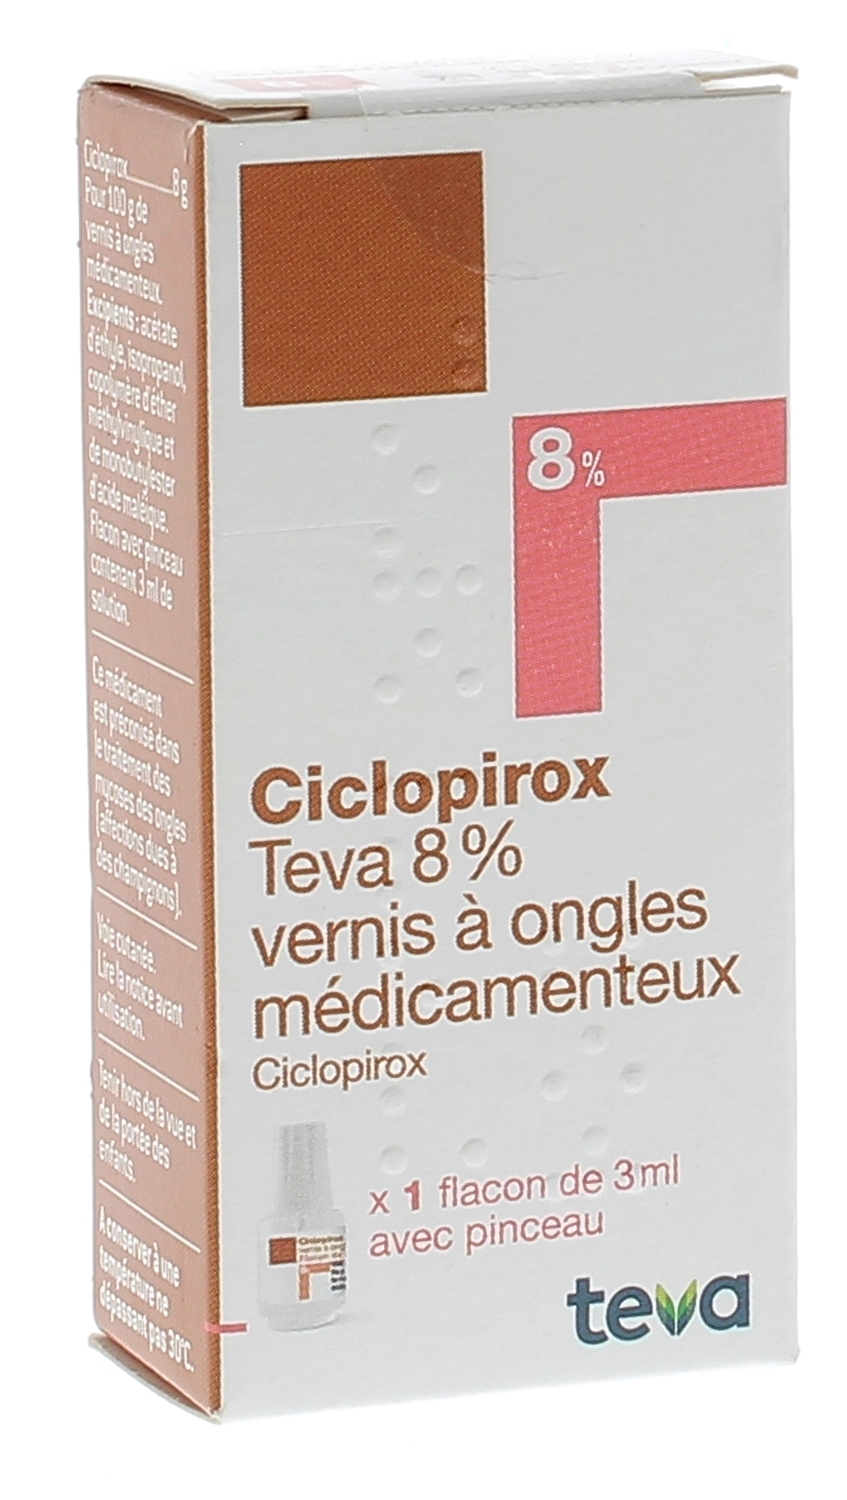 Ciclopirox 8% vernis à ongles médicamenteux Teva - flacon de 3ml